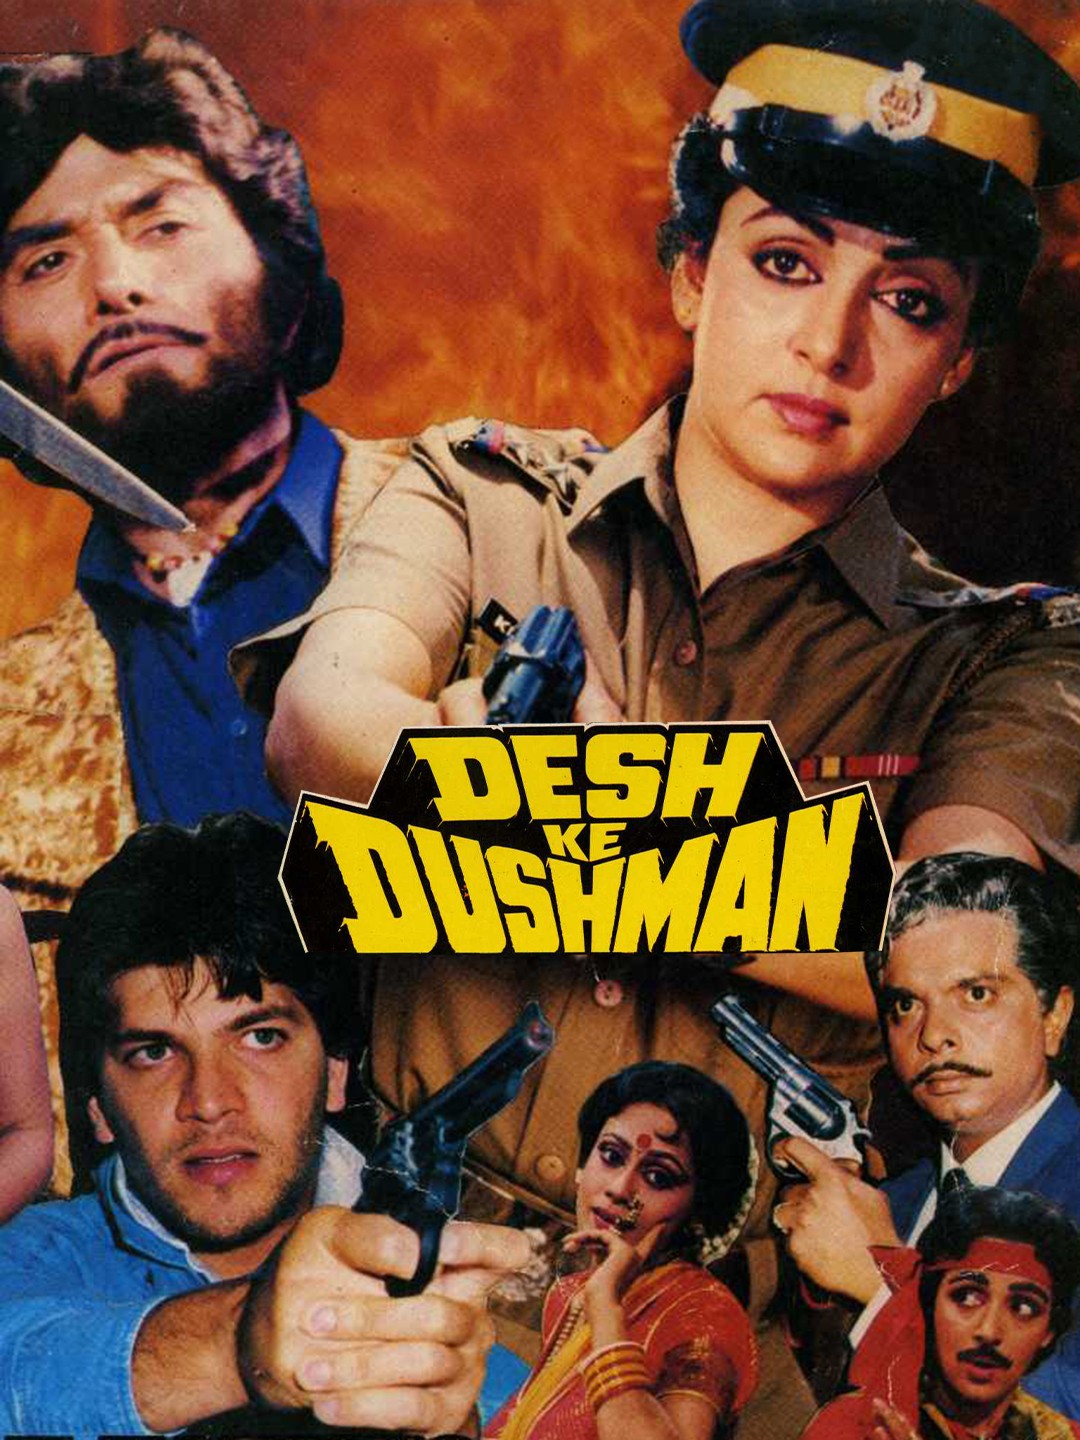 Dushman No.1 Hindi Dubbed Full Movie (MUKUNDA) | Varun Tej, Pooja Hegde |  Aditya Movies - YouTube